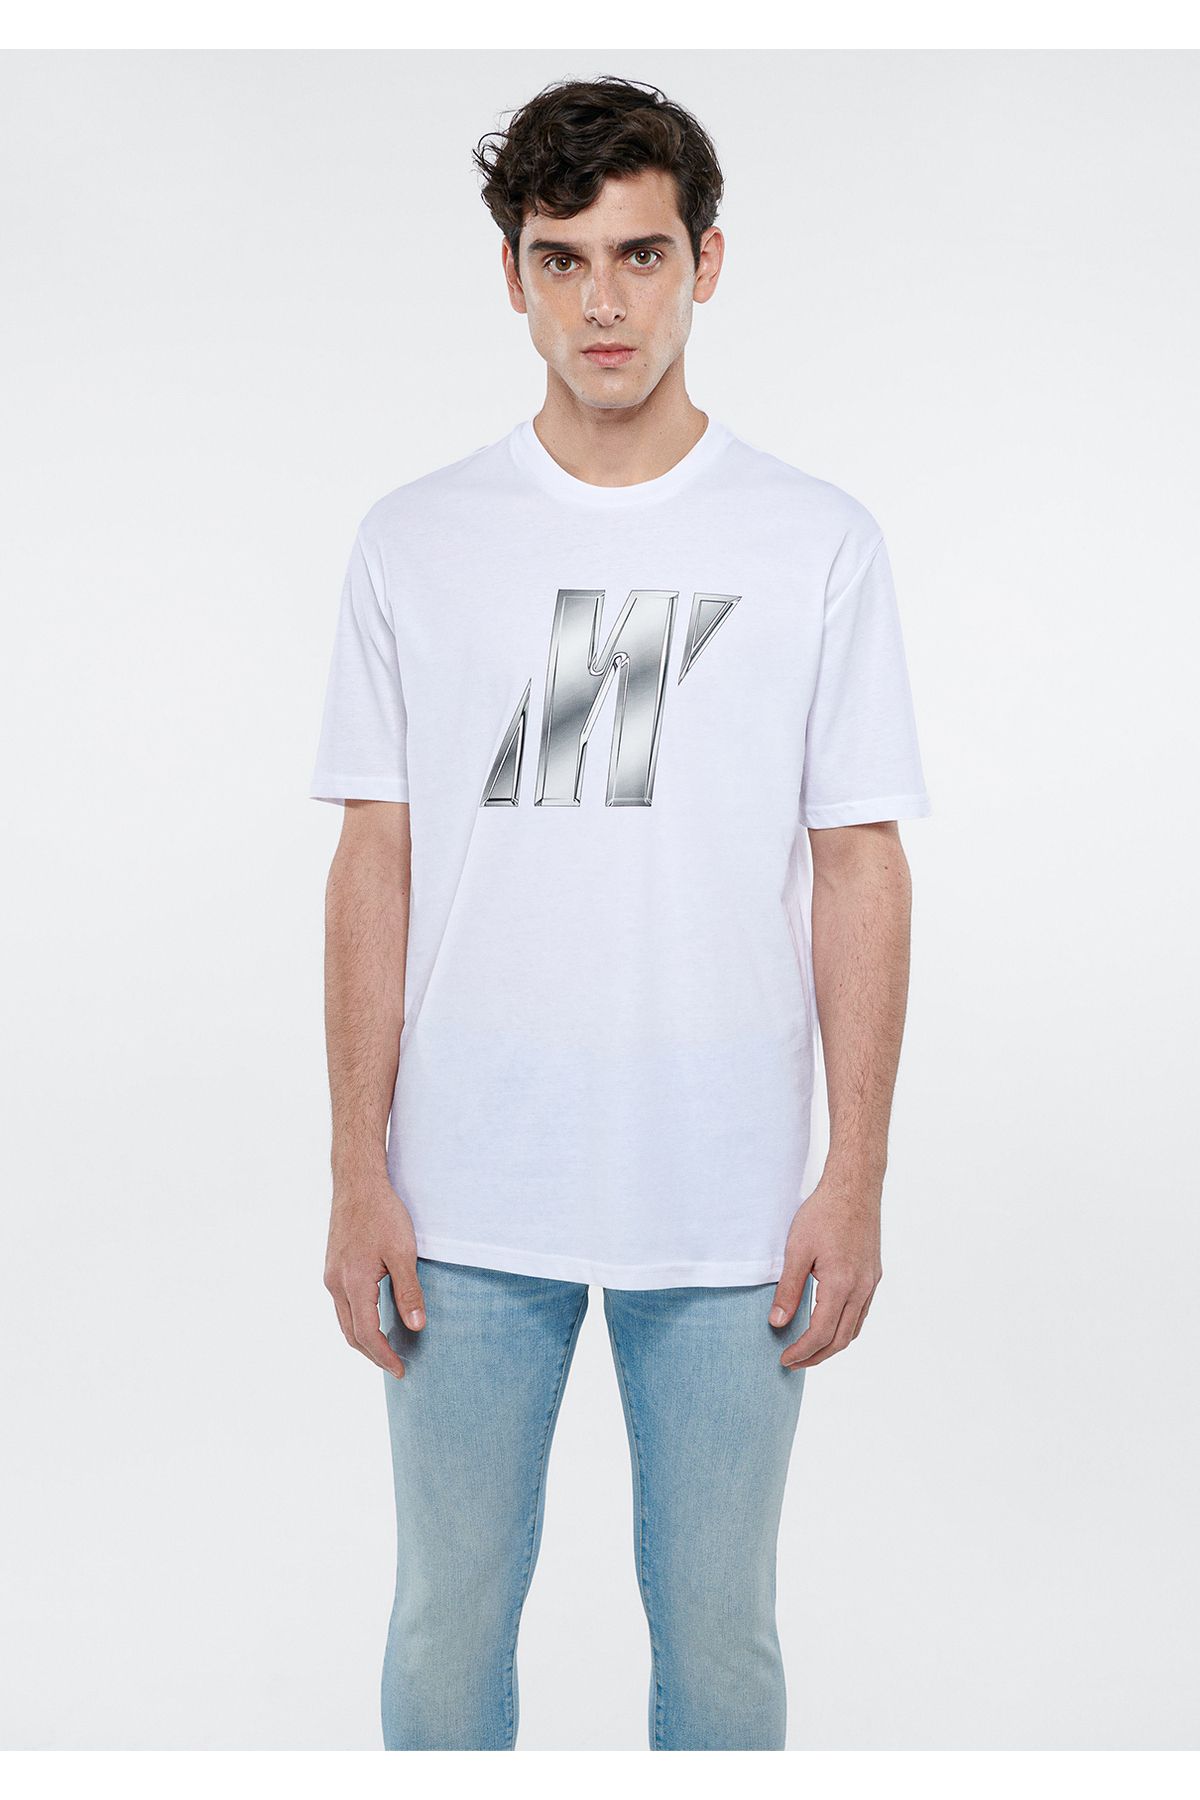 Mavi آرم Pro Logo چاپ شده تی شرت سفید تناسب